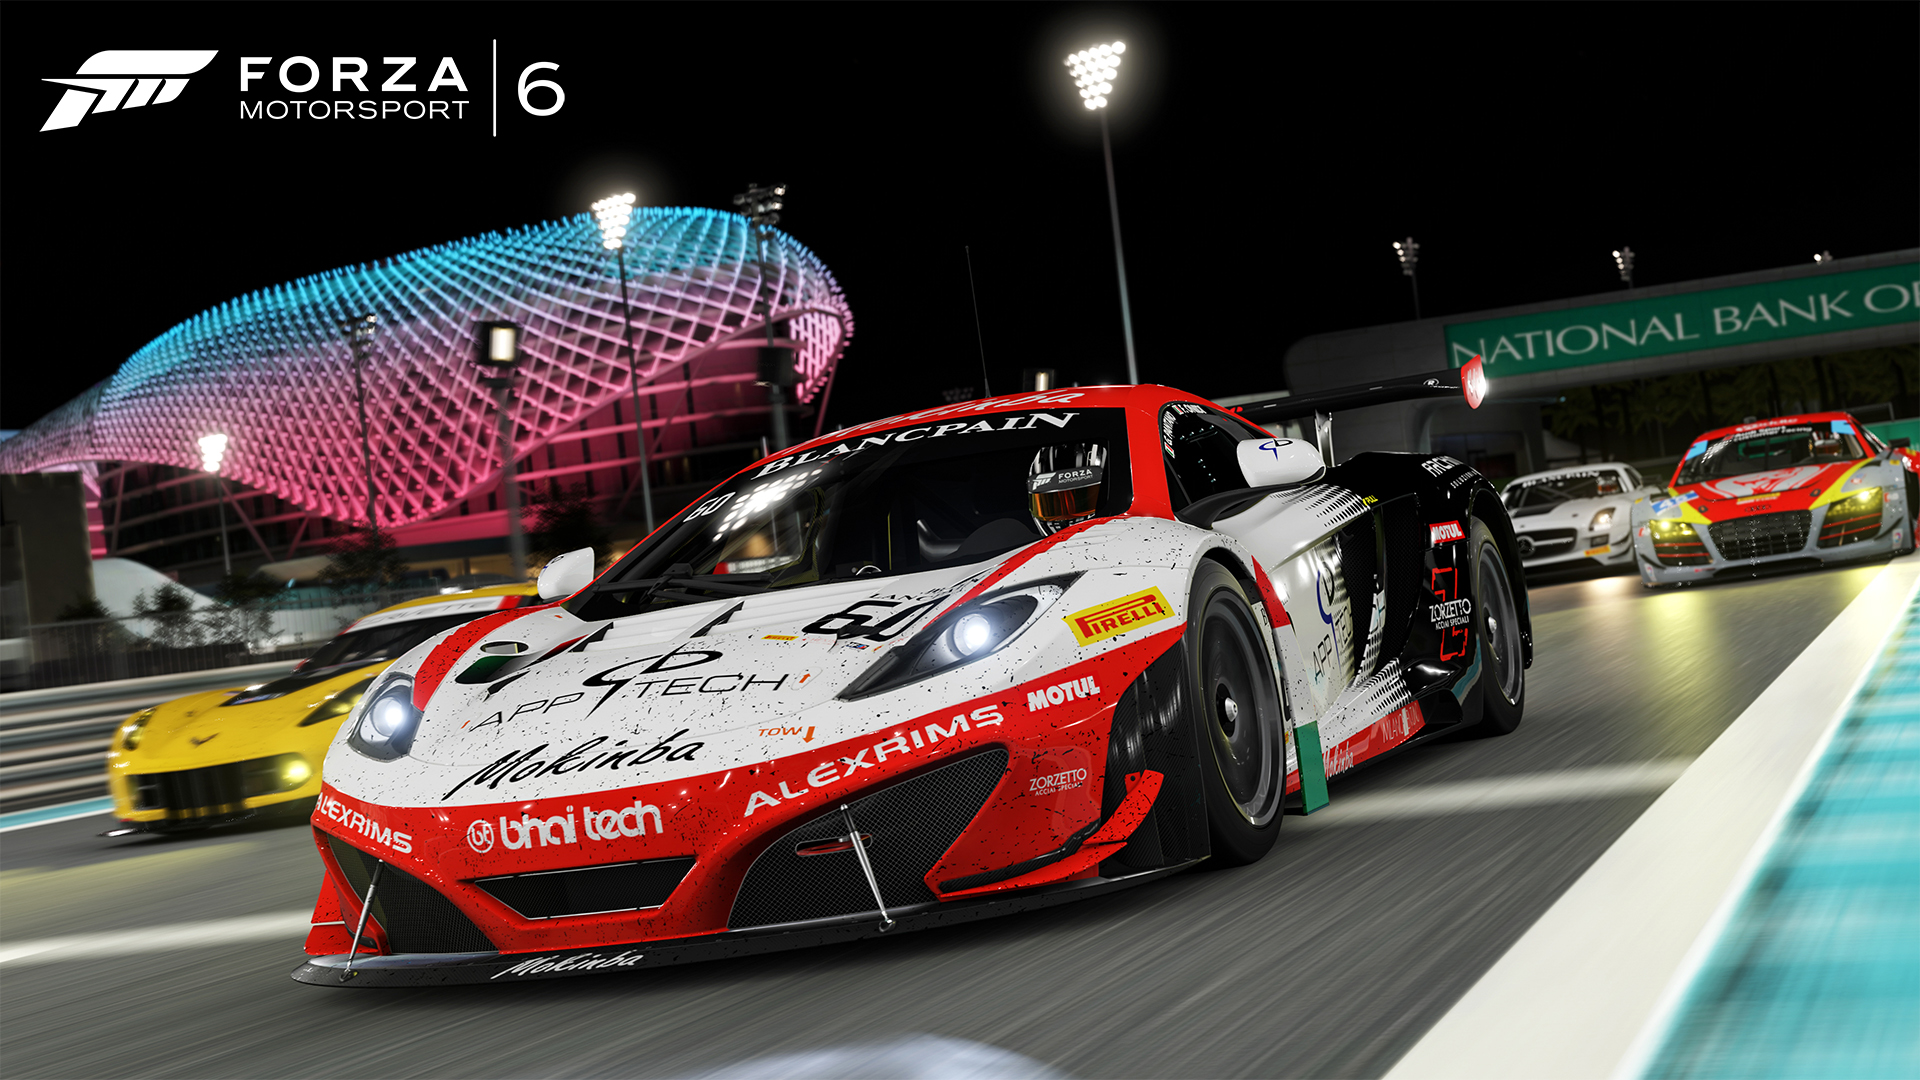 Baixar papel de parede para celular de Forza Motorsport 6, Videogame gratuito.